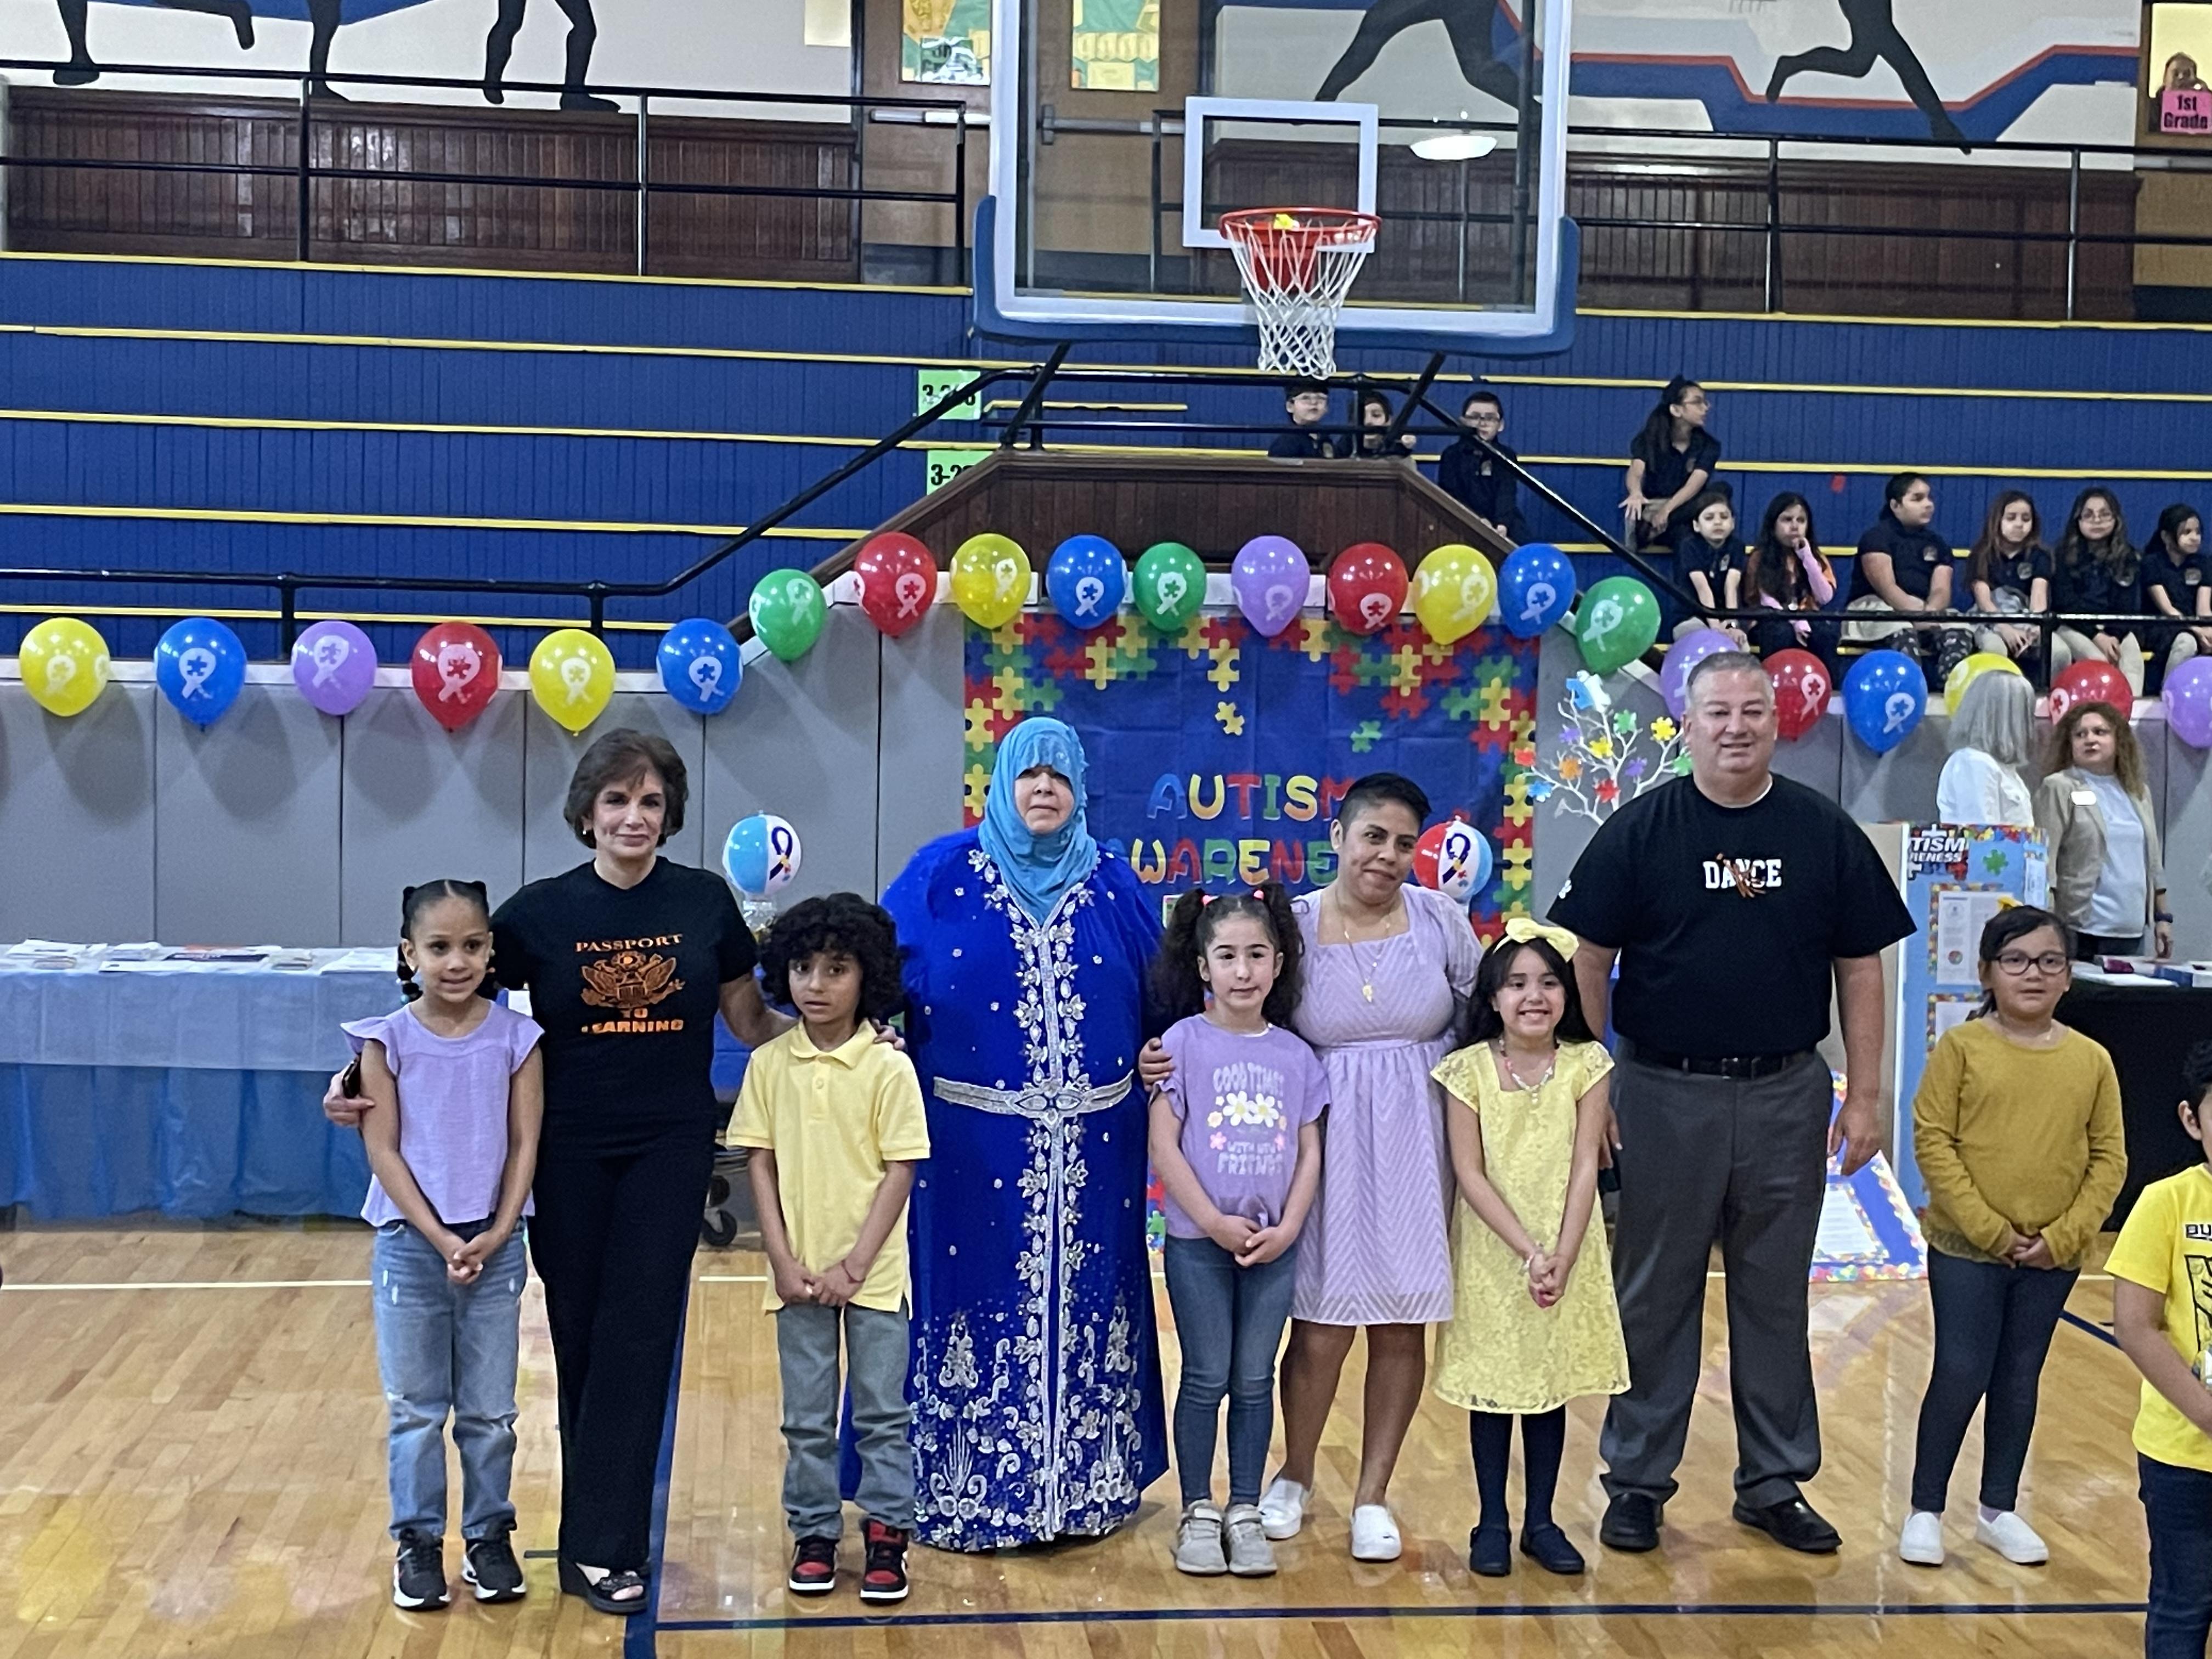 Celebrating Eid at the Washington School